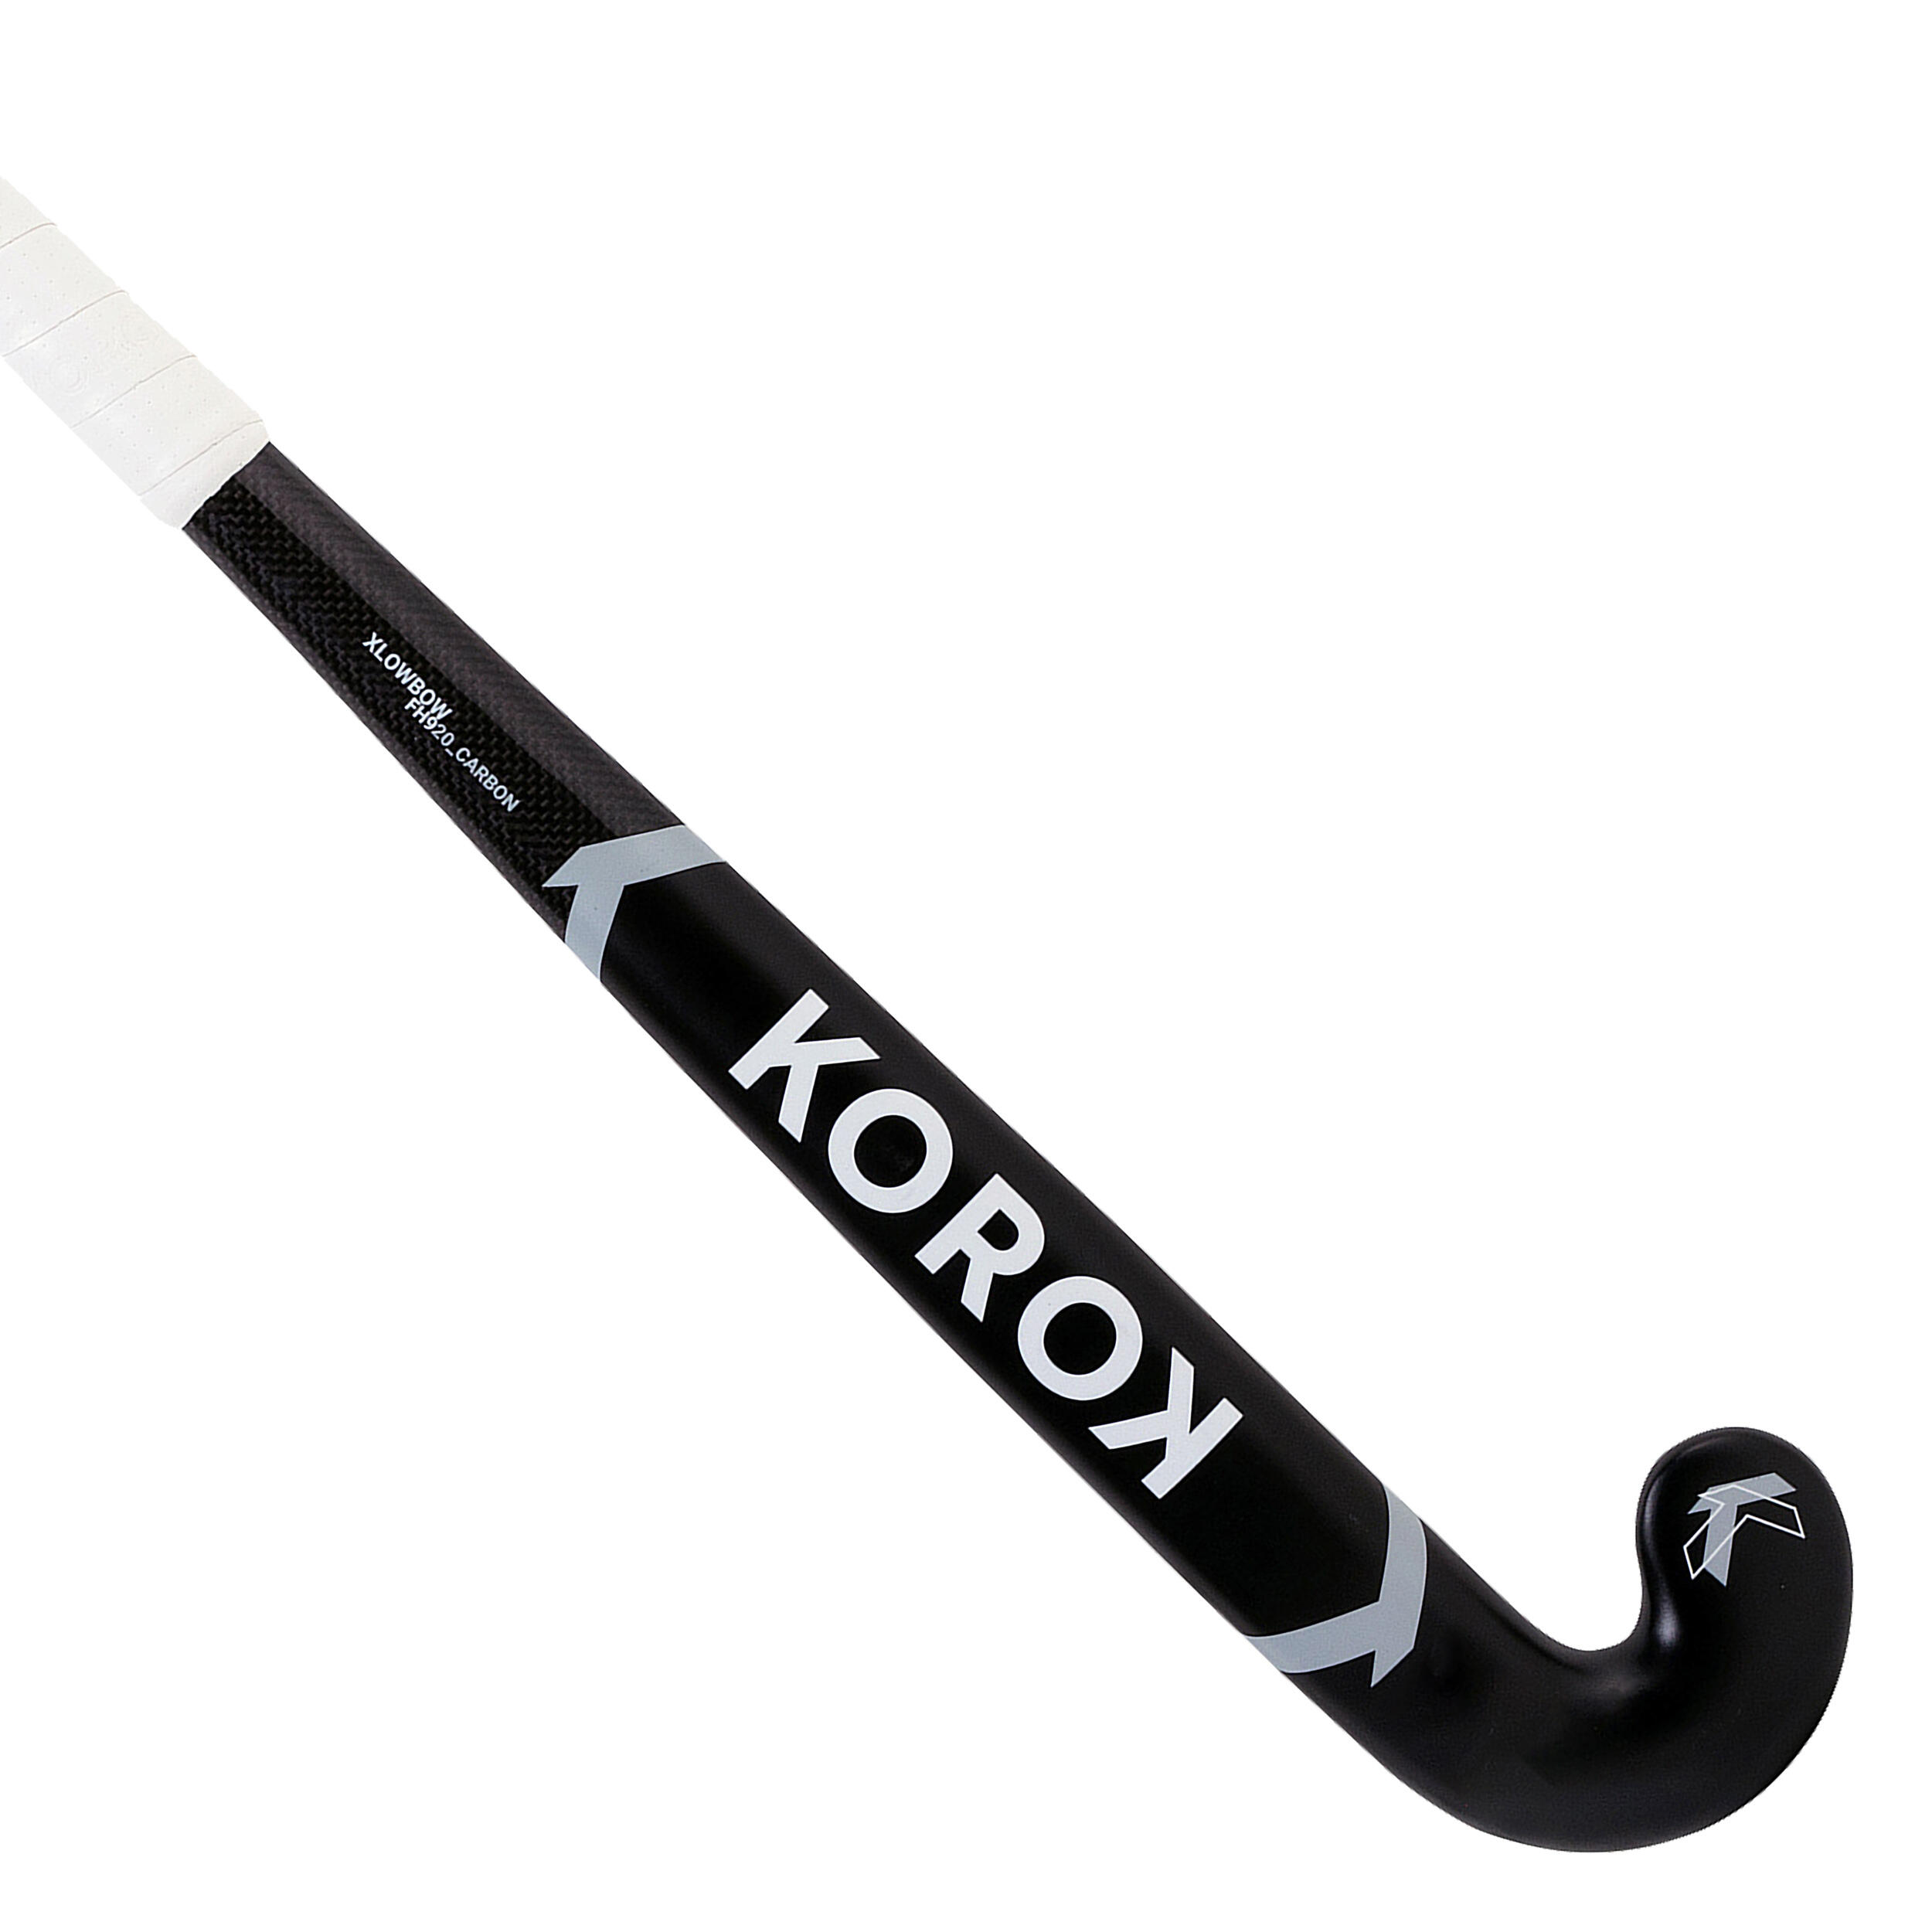 KOROK Teens' 20% Carbon Extra Low Bow Field Hockey Stick FH920 - Black/Grey